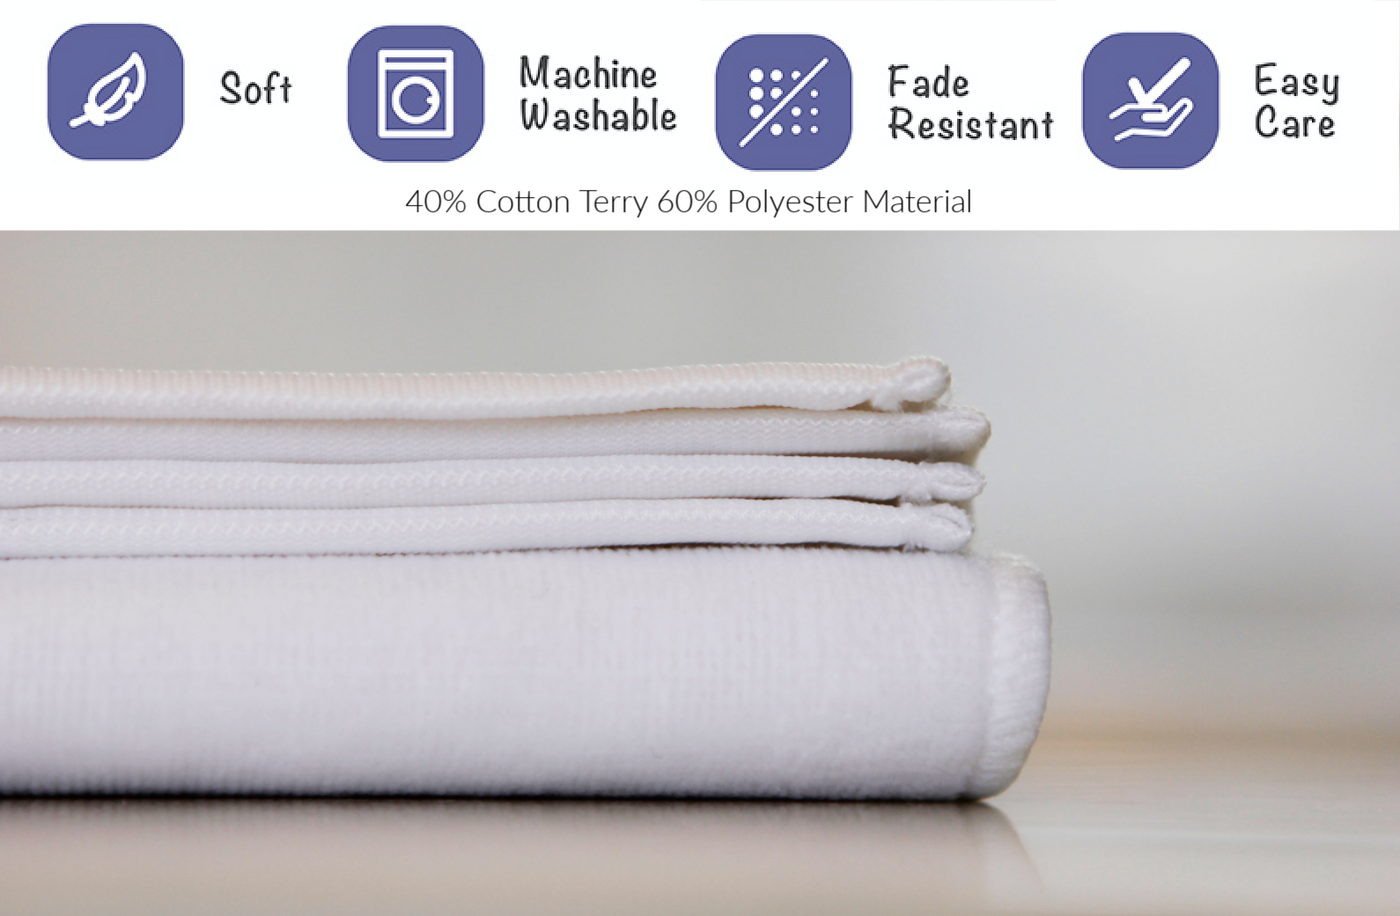 Cheetah Vertical Design Towel - Choose your color!